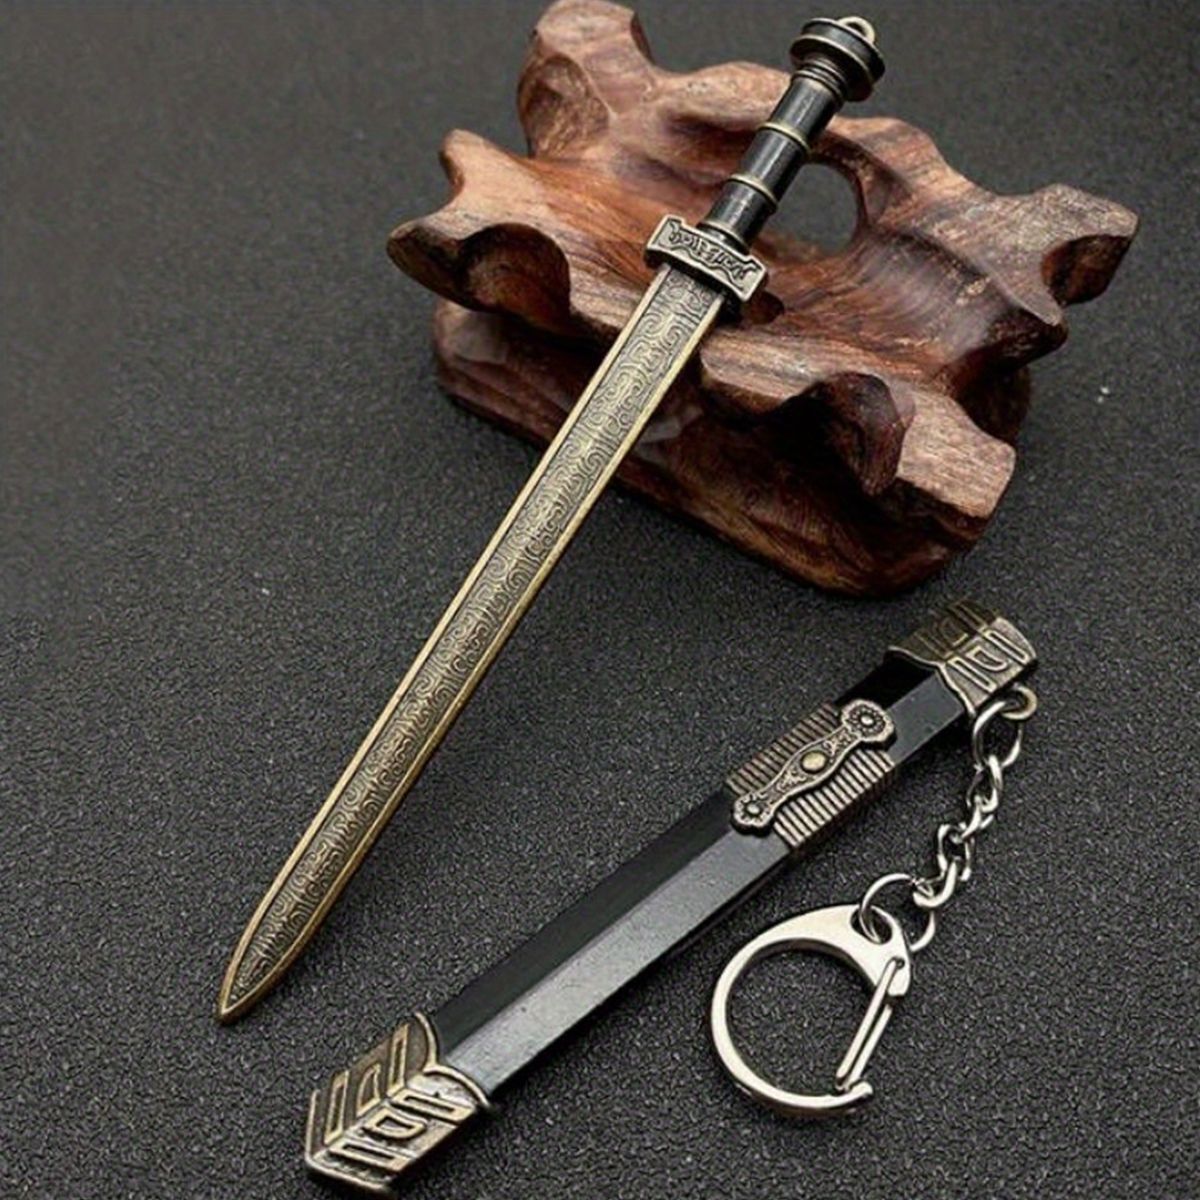 Ancient Chinese Mini Sword Keychain Sword Metal Weapon Toy Key Chain Cute Keycha